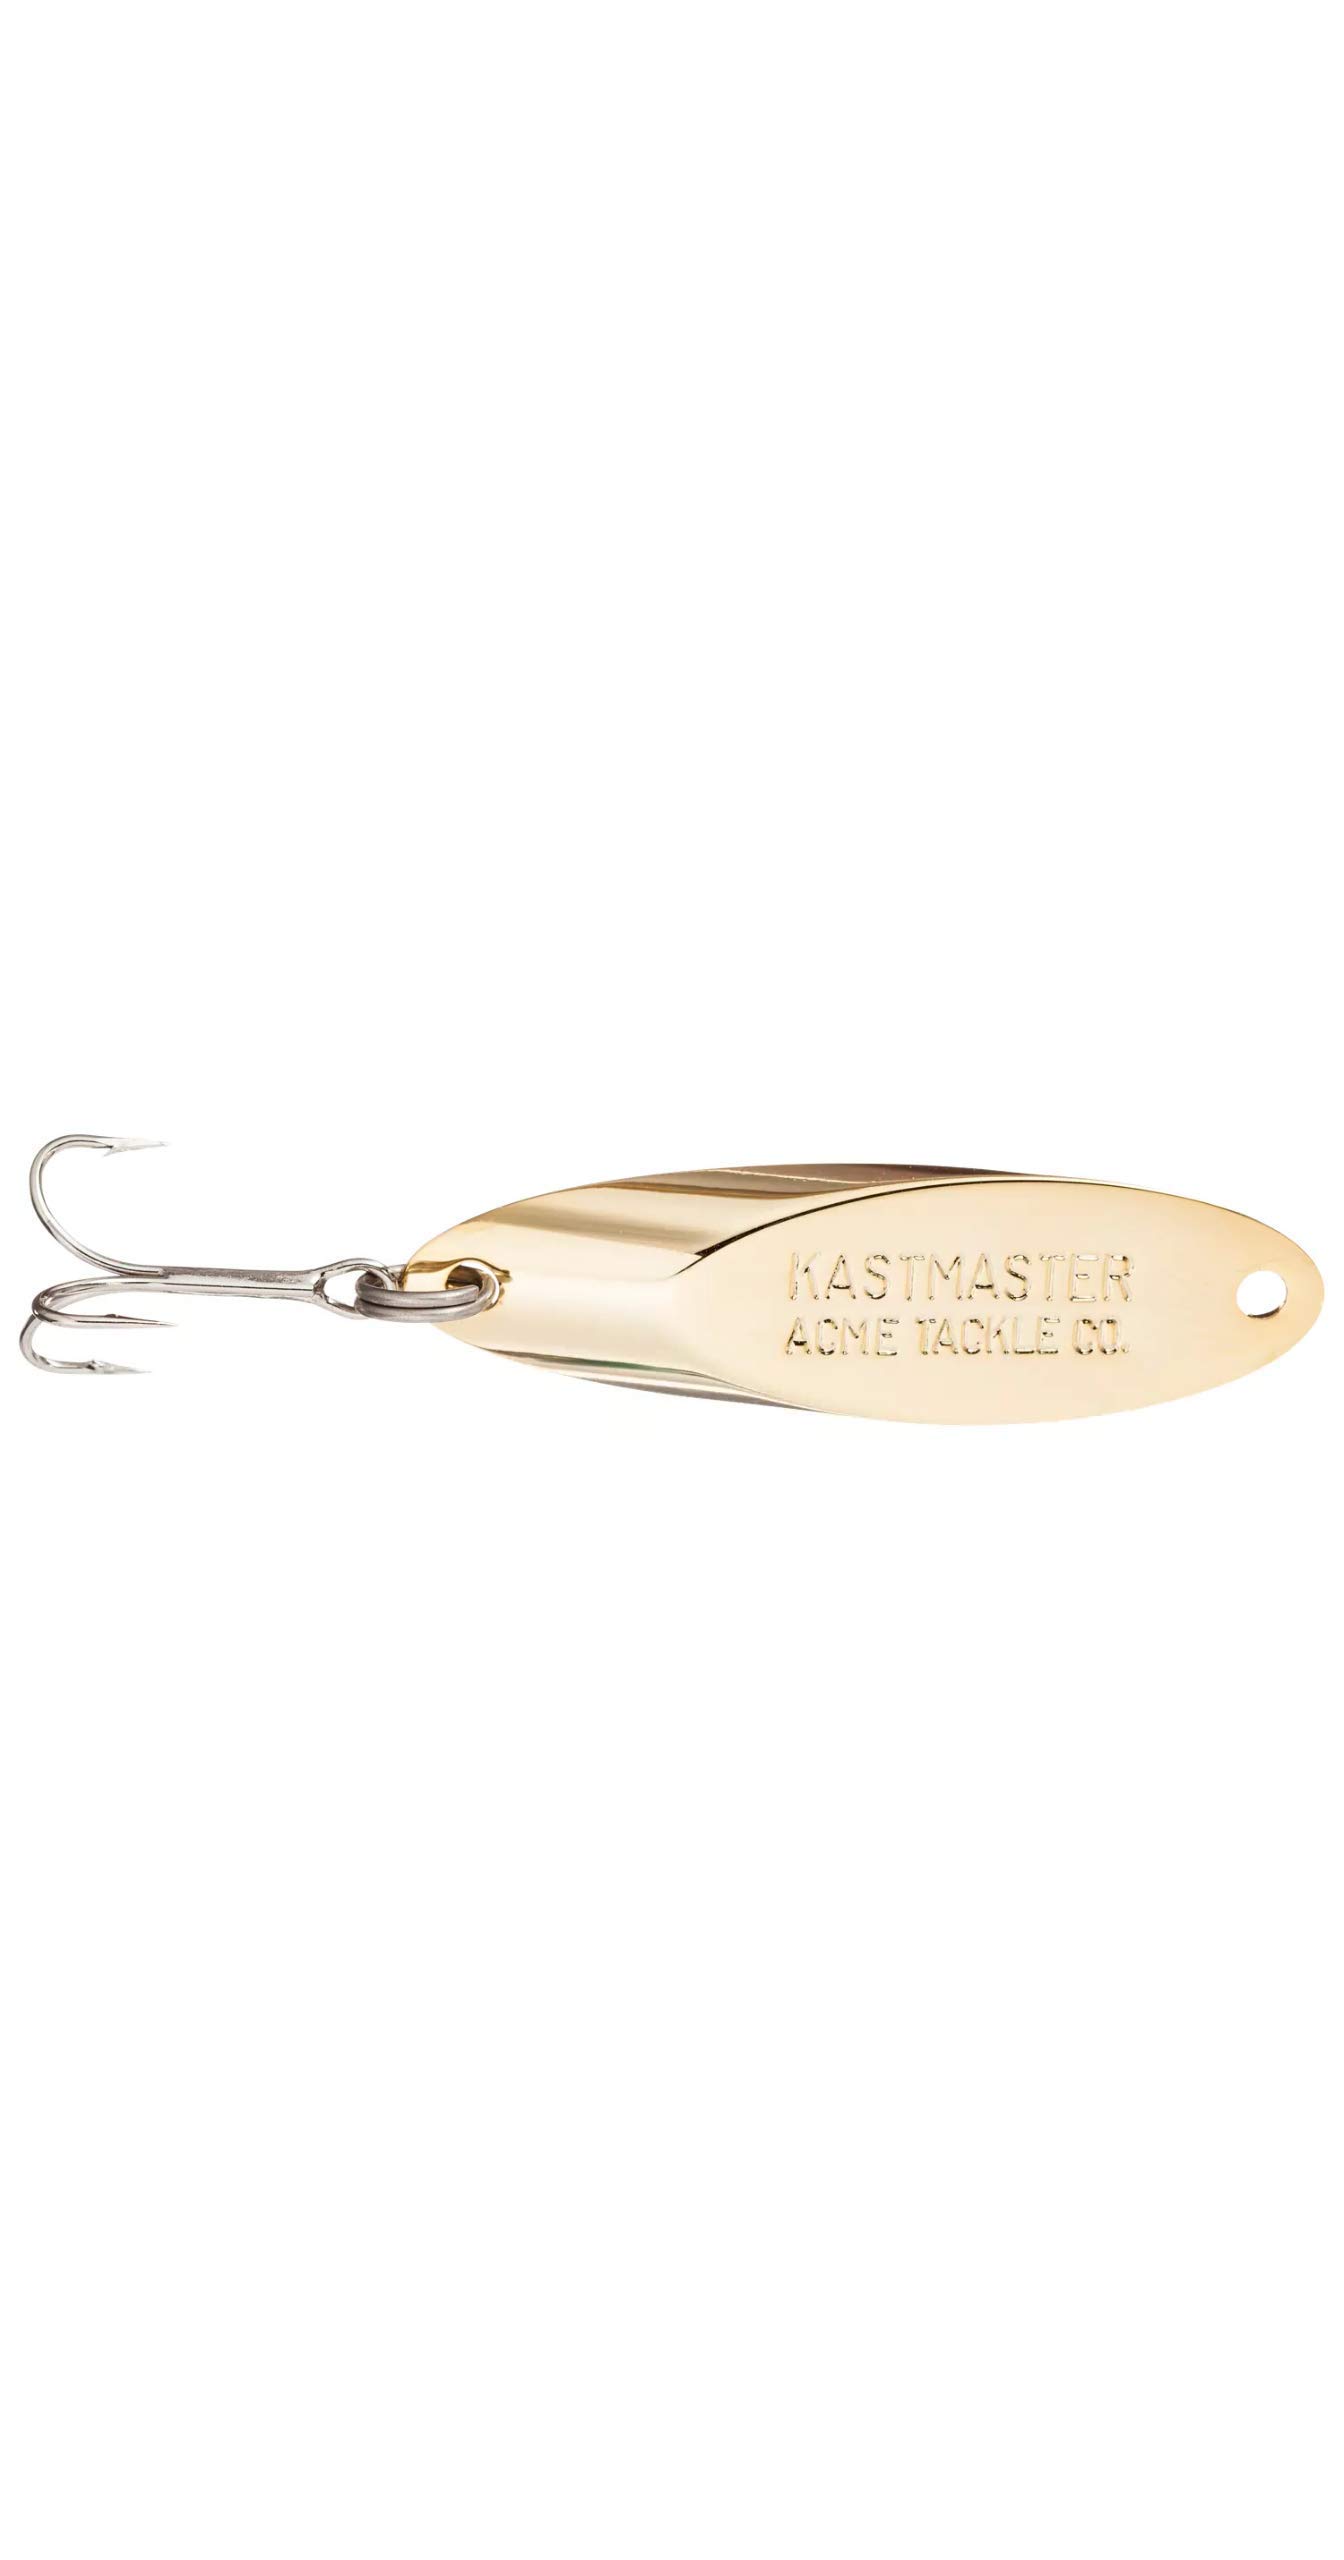 Acme Kastmaster Fishing Lure - Balanced and Aerodynamic for Huge